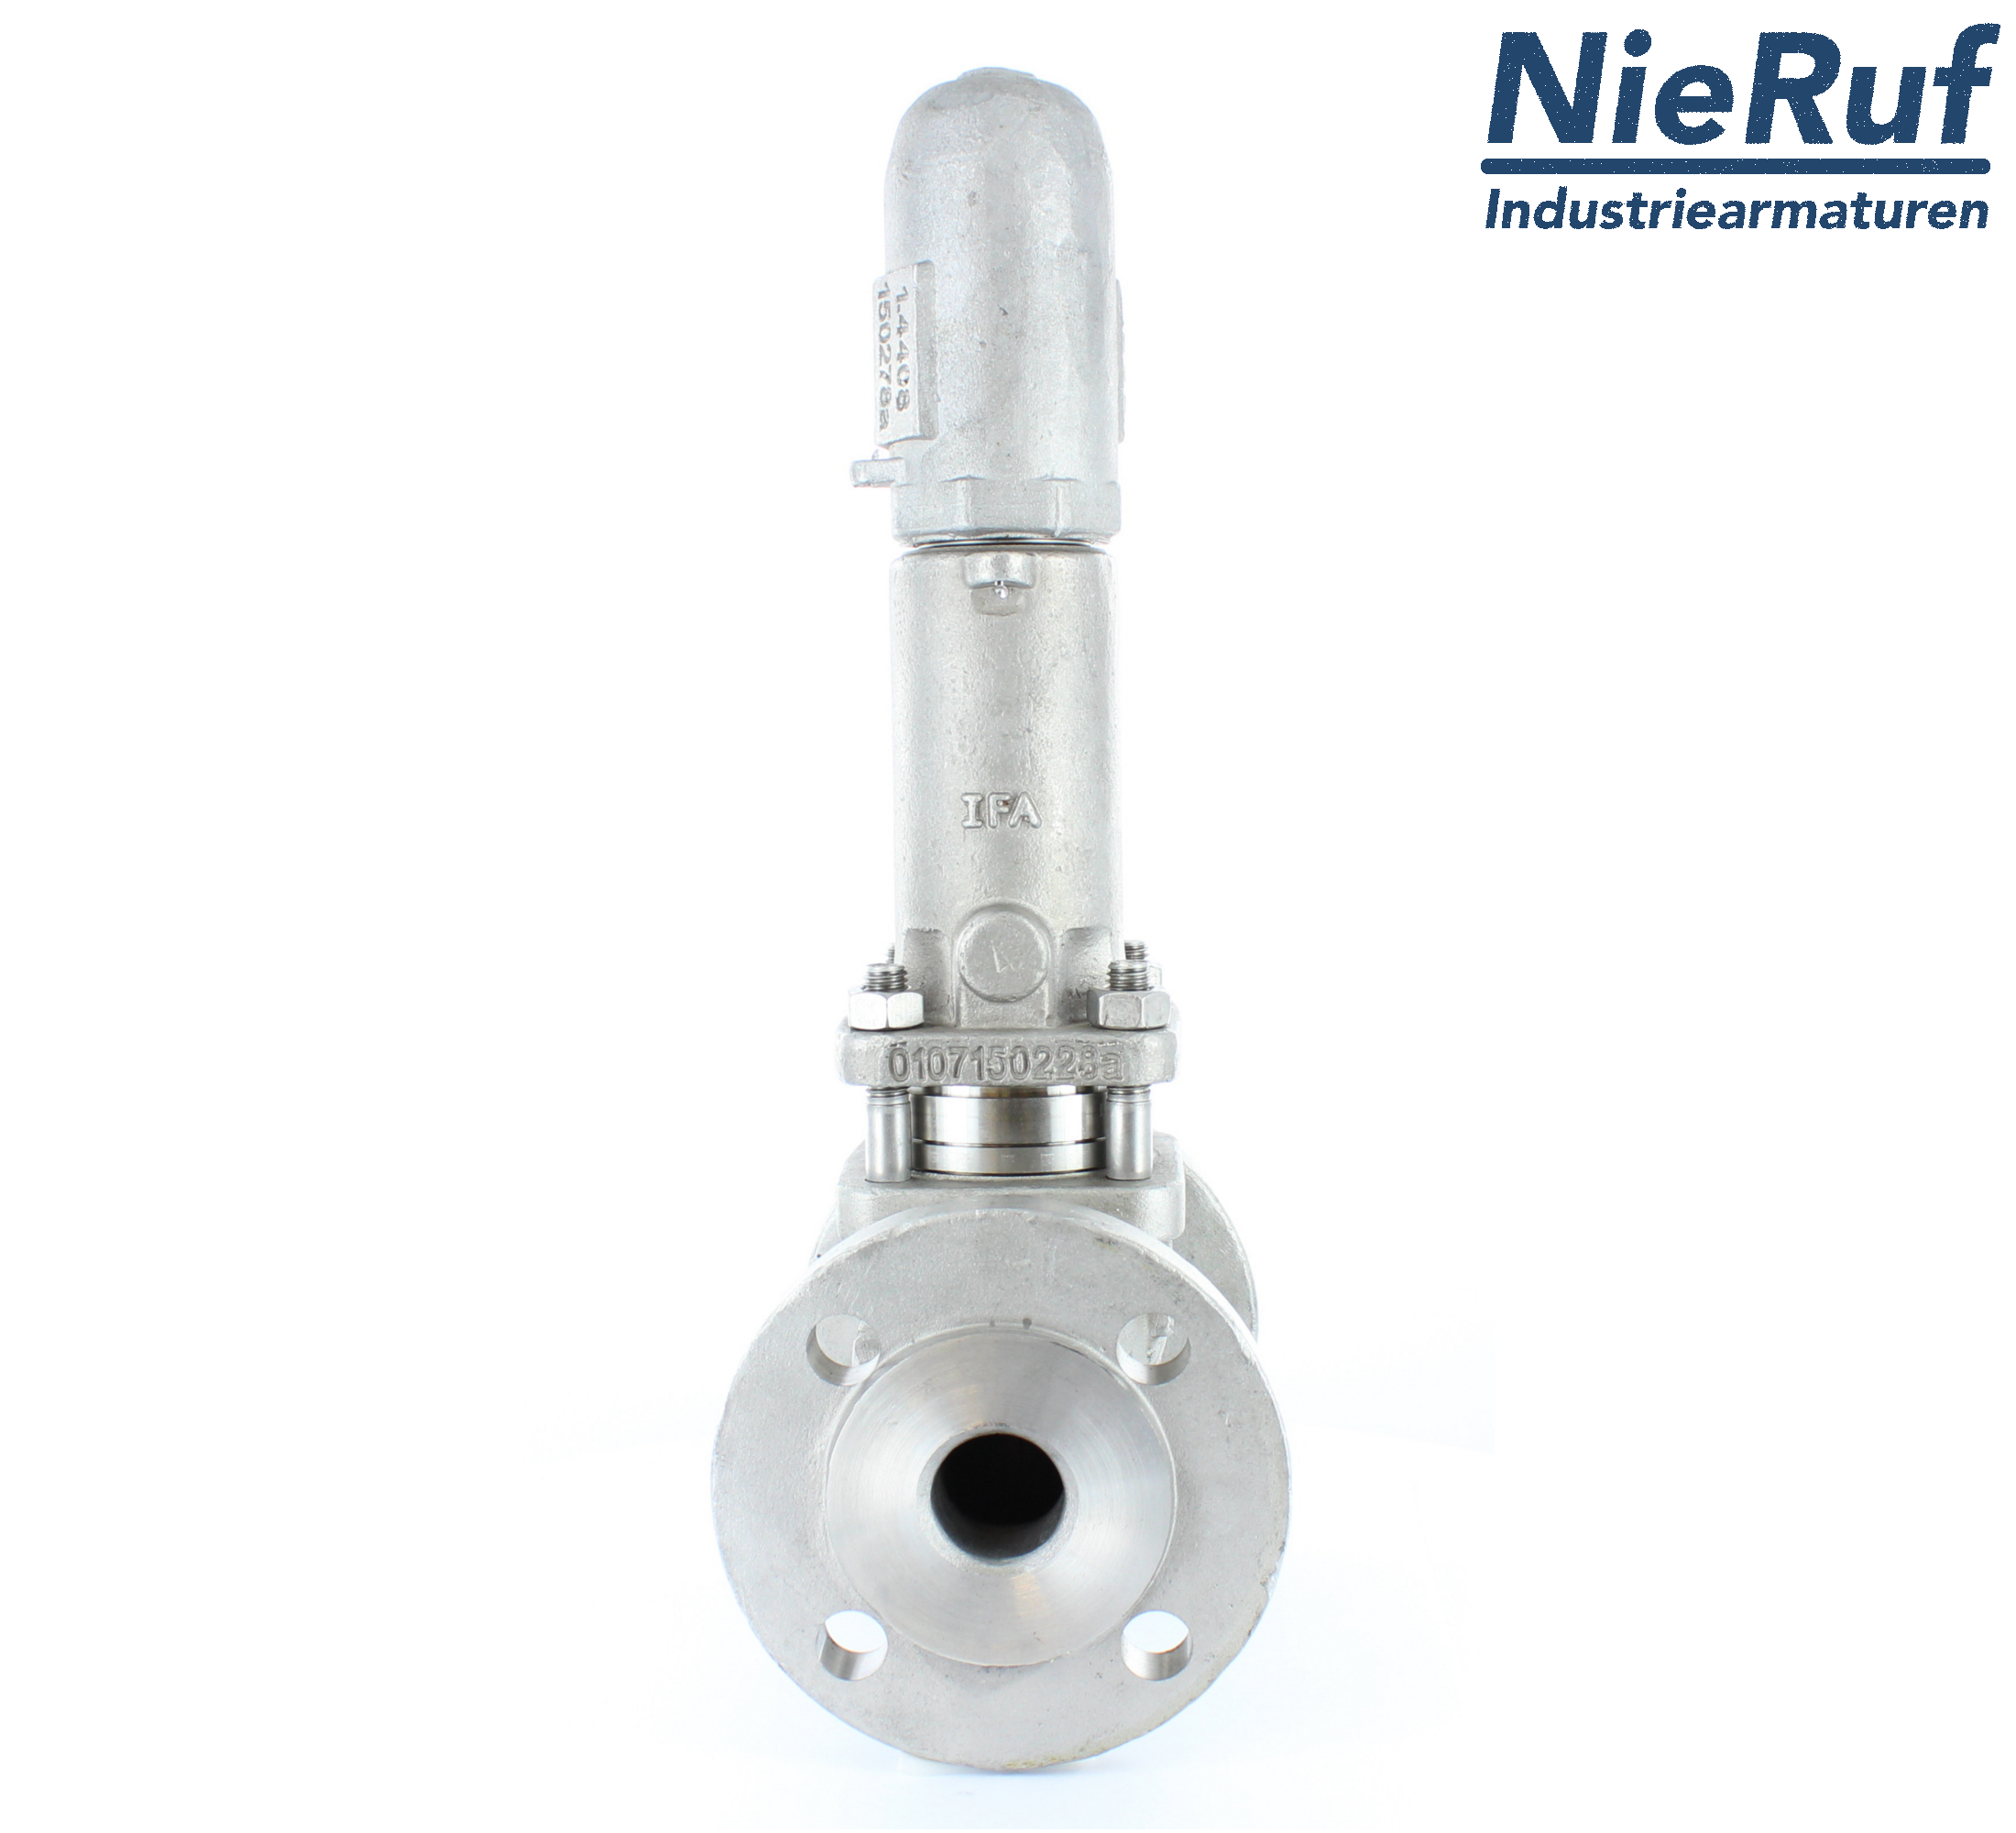 piston overflow valve DN 20 UV13 stainless steel AISI 316L 0,5 - 1,5 bar